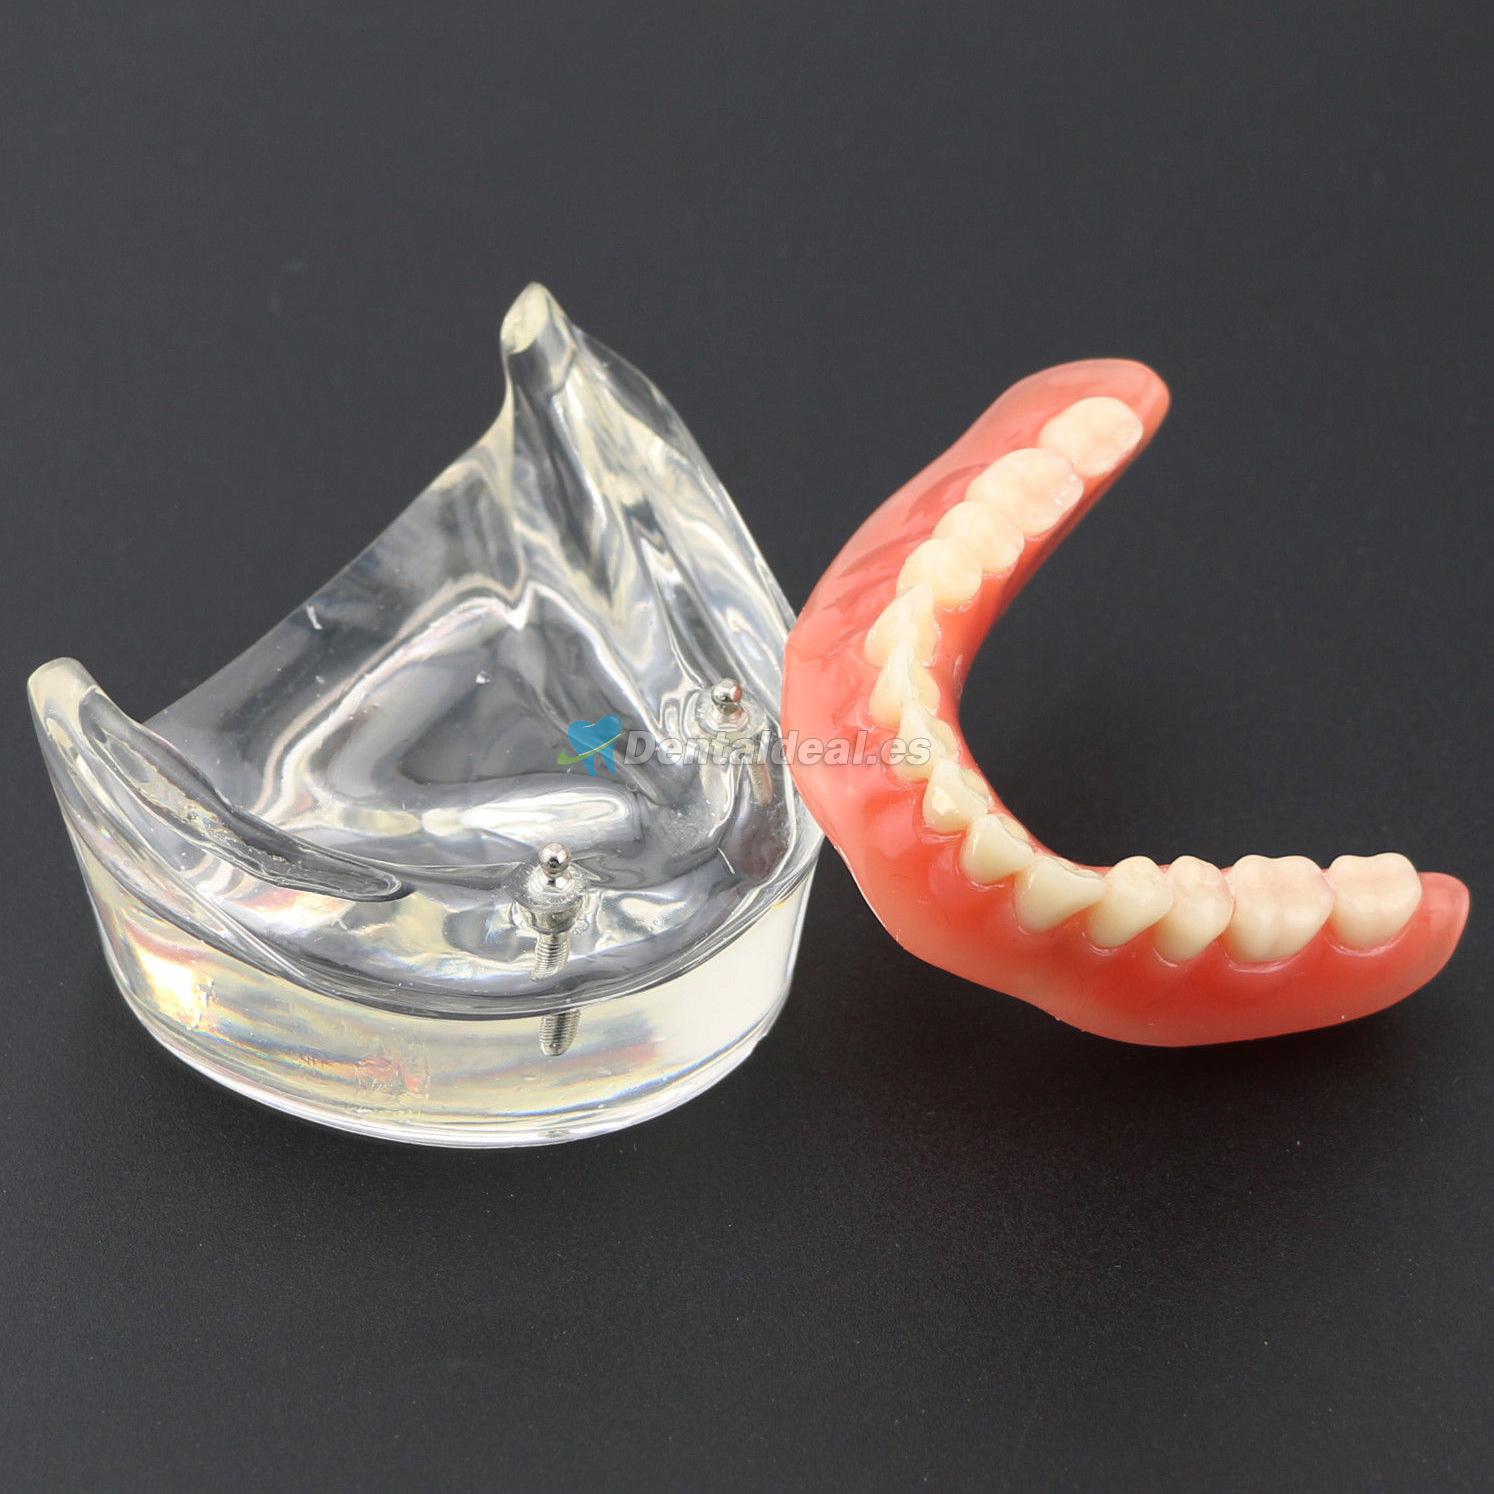 Dental Dientes inferiores Modelo de sobredentadura 2 Implantes Demostración Modelo 6002 01